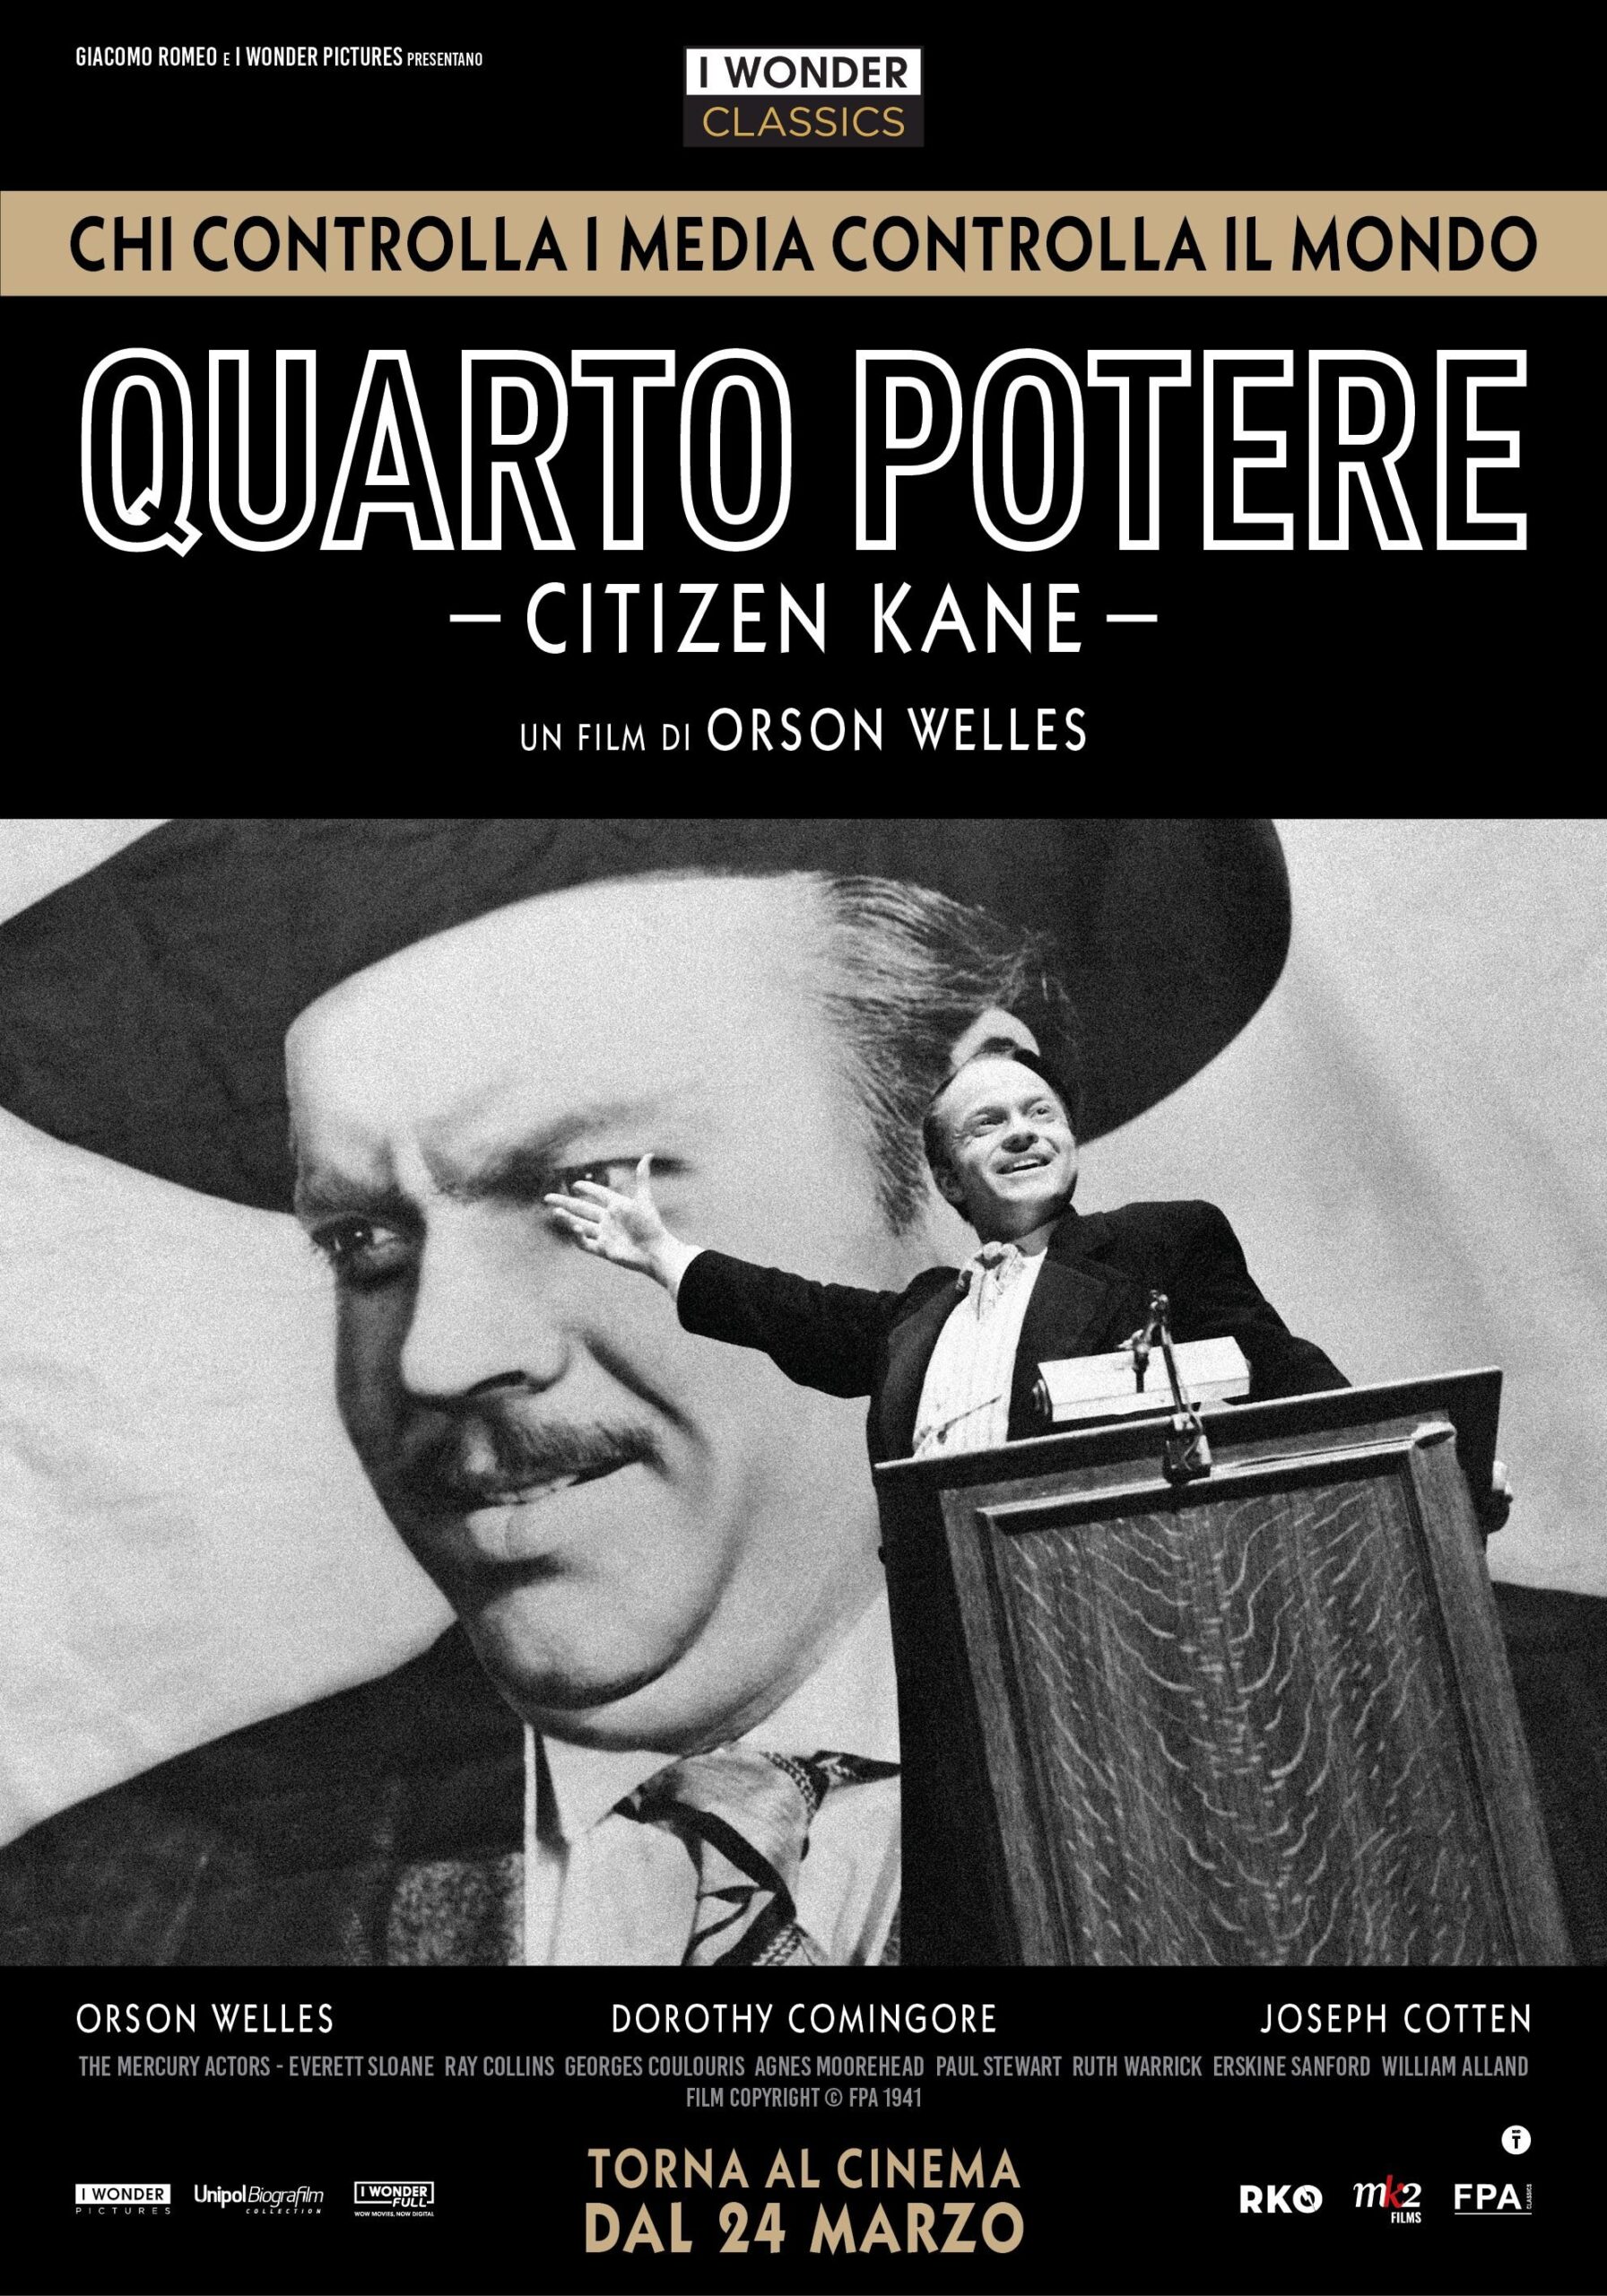 Quarto-Potere-Citizen-Kane-poster